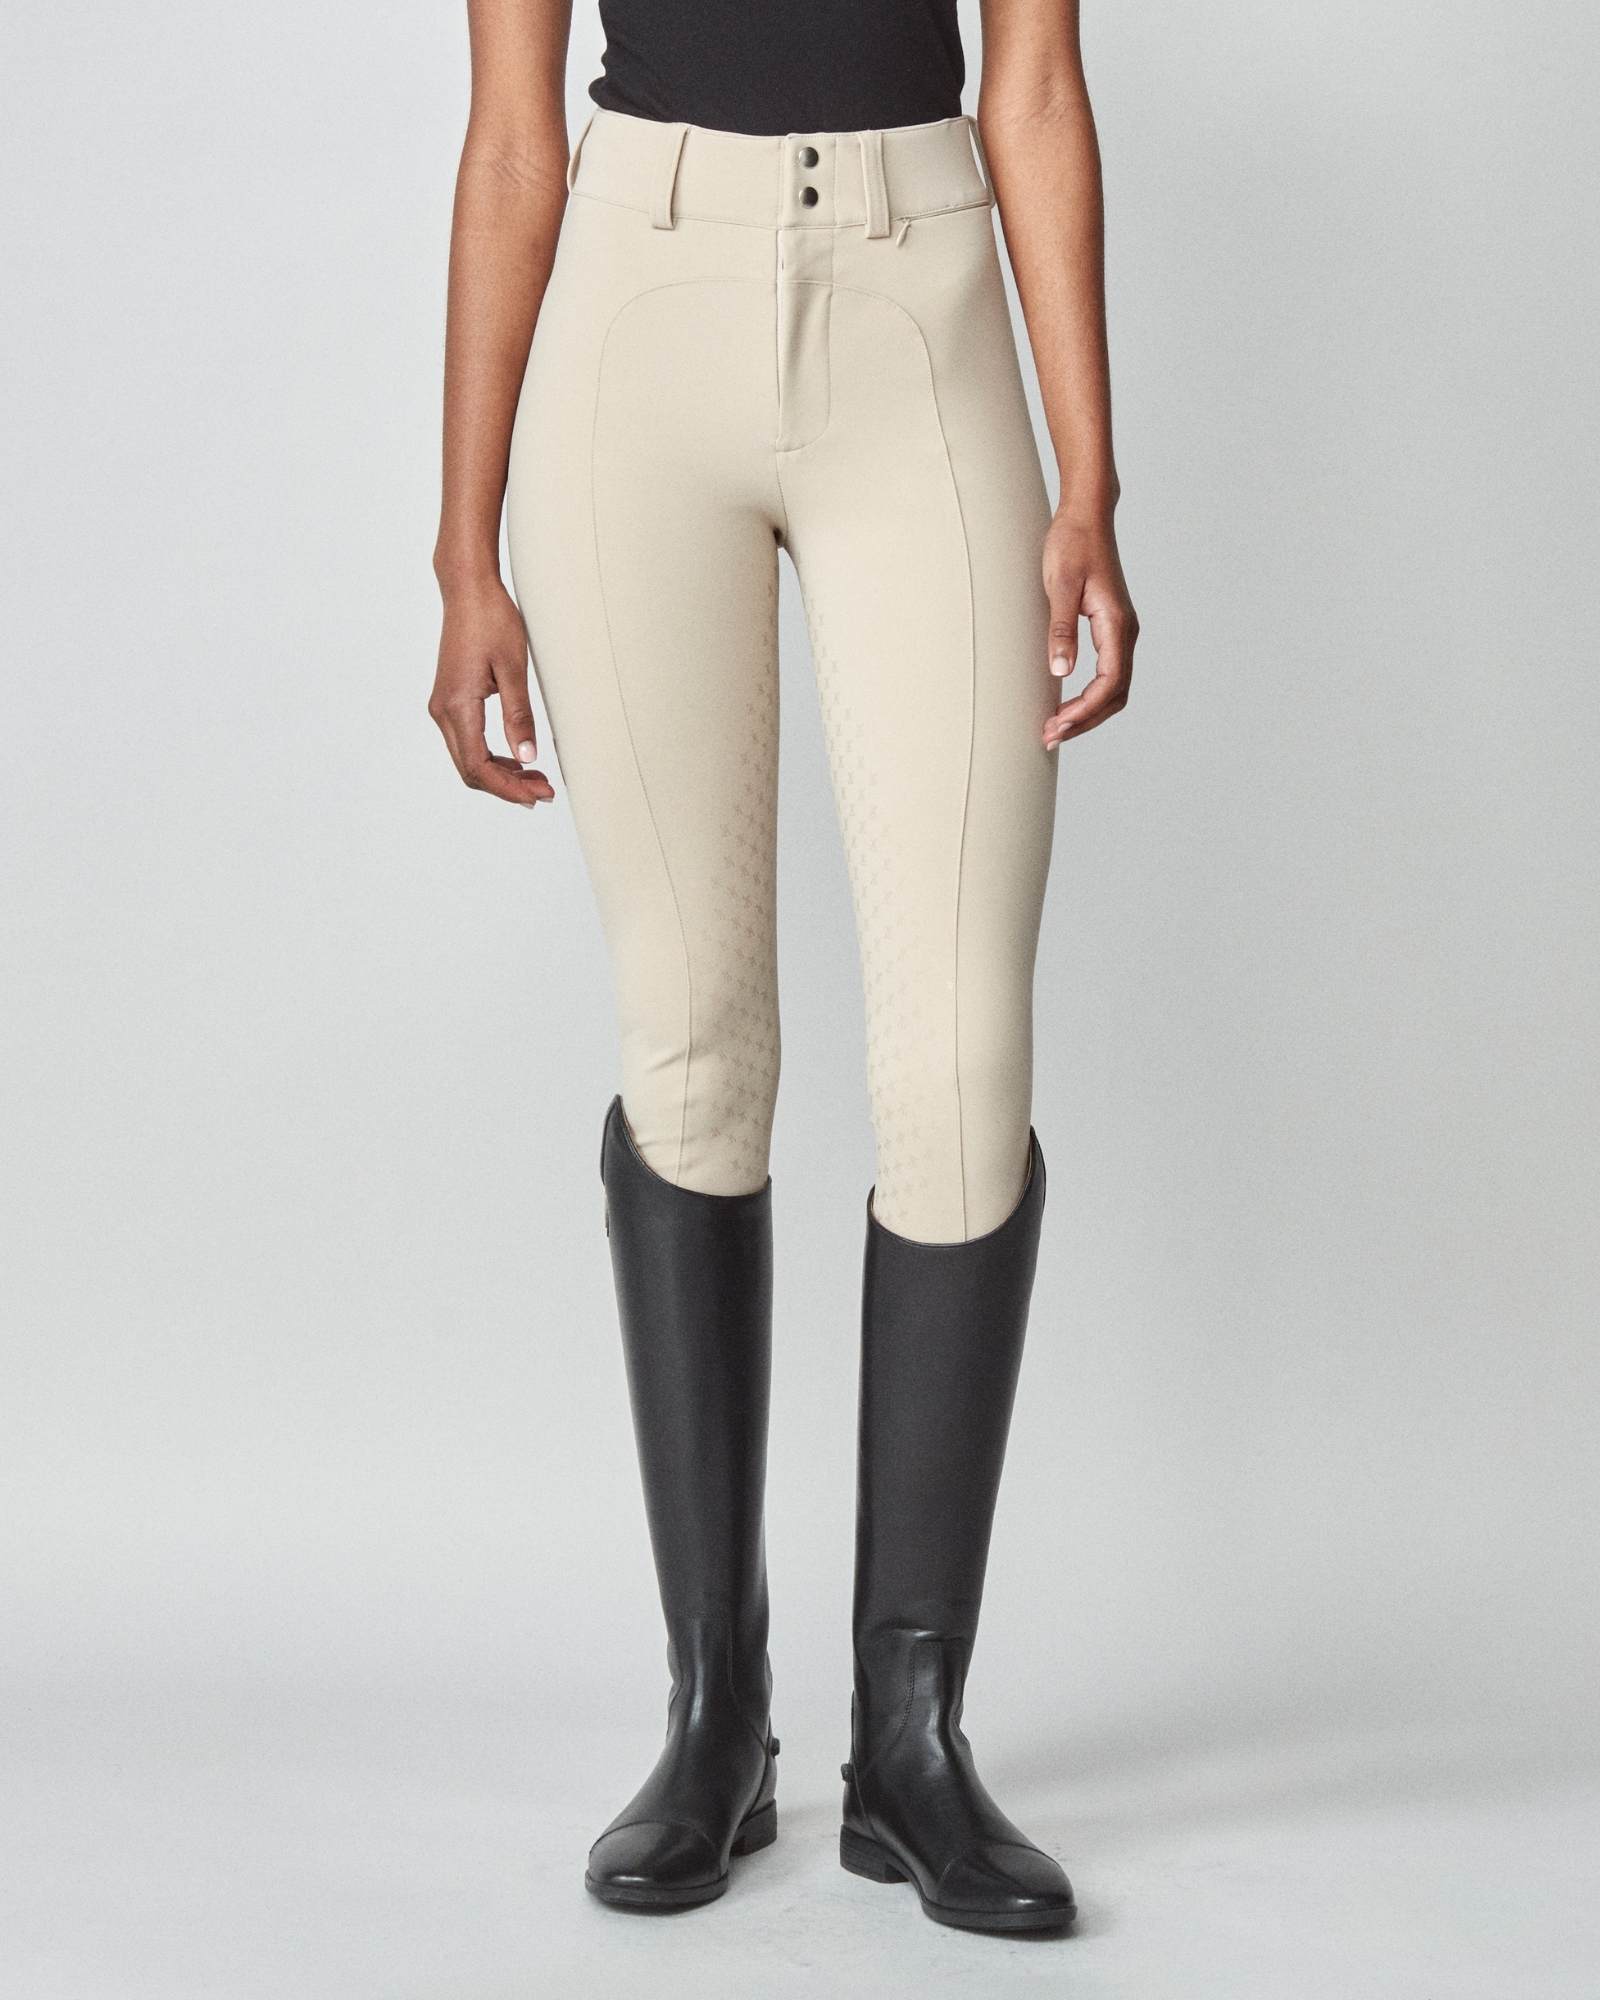 New EQUI Comfort Breeches Equestrian Riding Pants Khaki Tan Stretch Size 32  Long | eBay